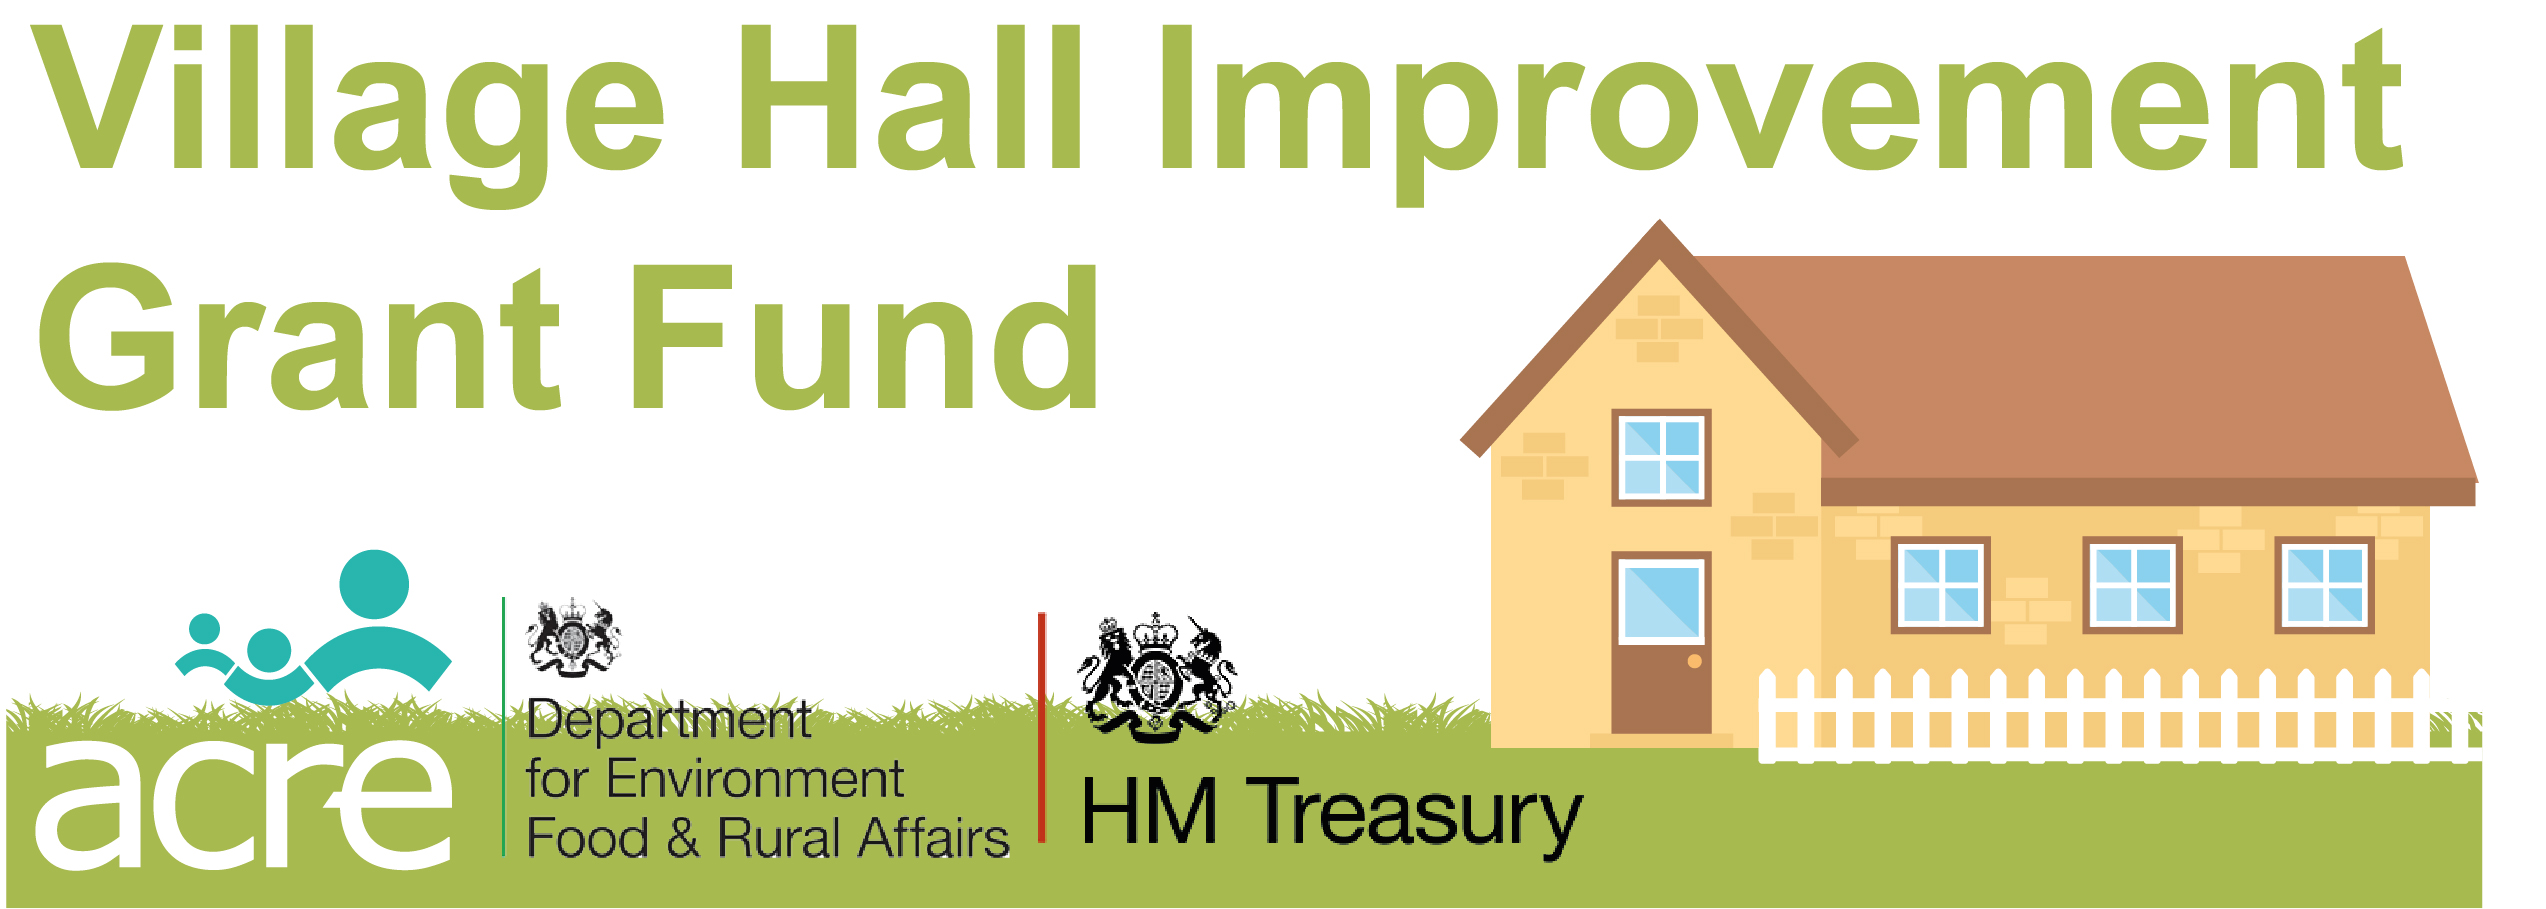 Village Hall Improvement Grant Fund